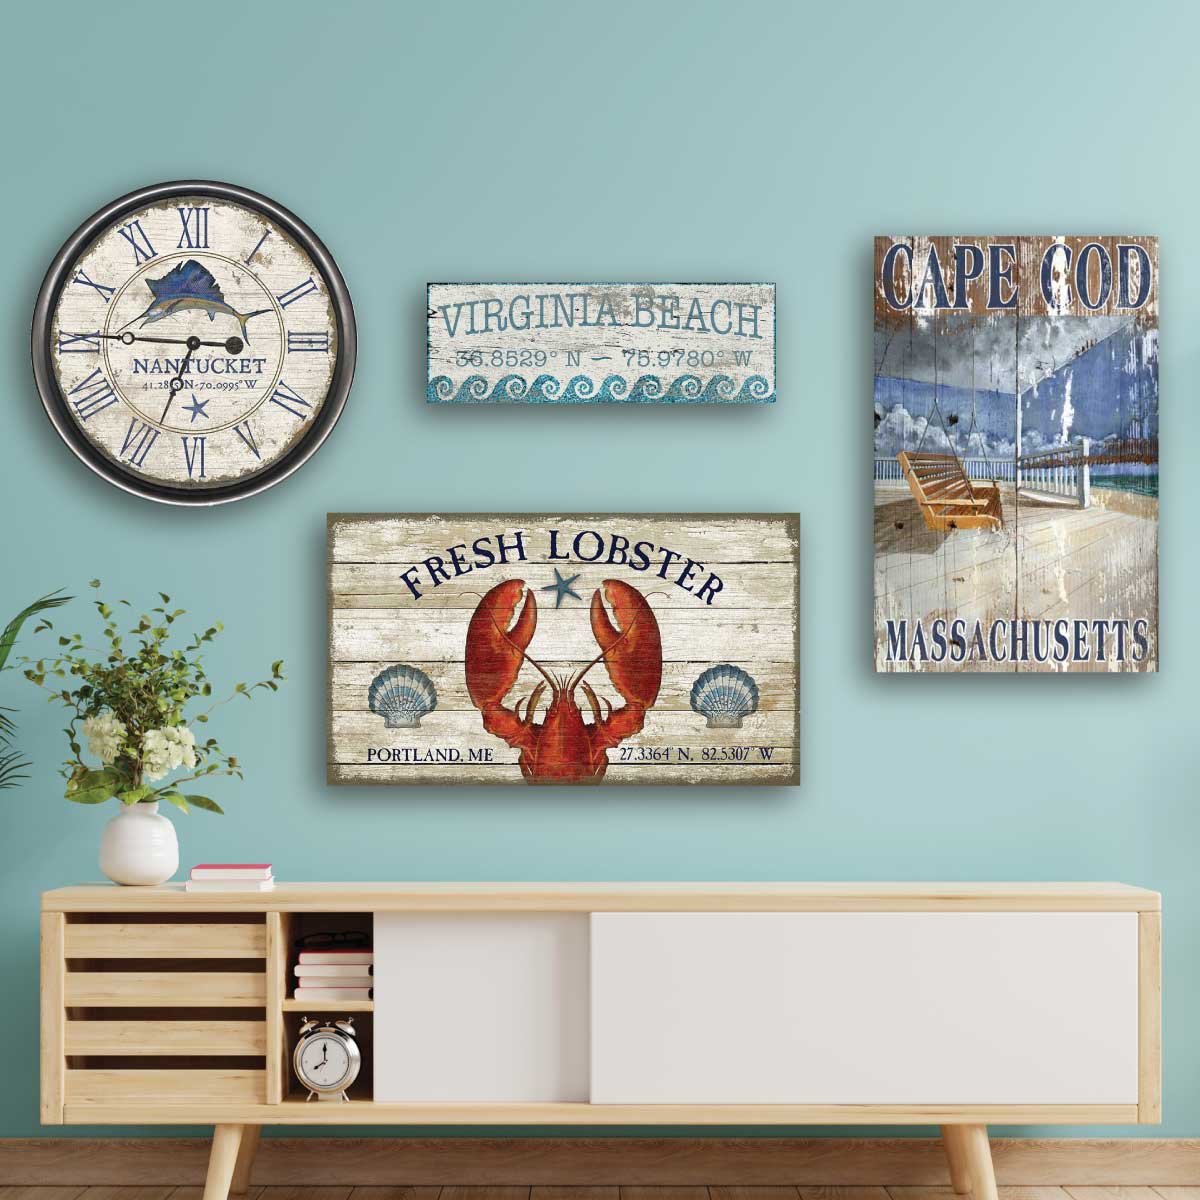 Coastal and ocean themed vintage-style wall art - Virginia Beach, Cape Code and Fresh Lobster wood signs and Nantucket sailfish clock